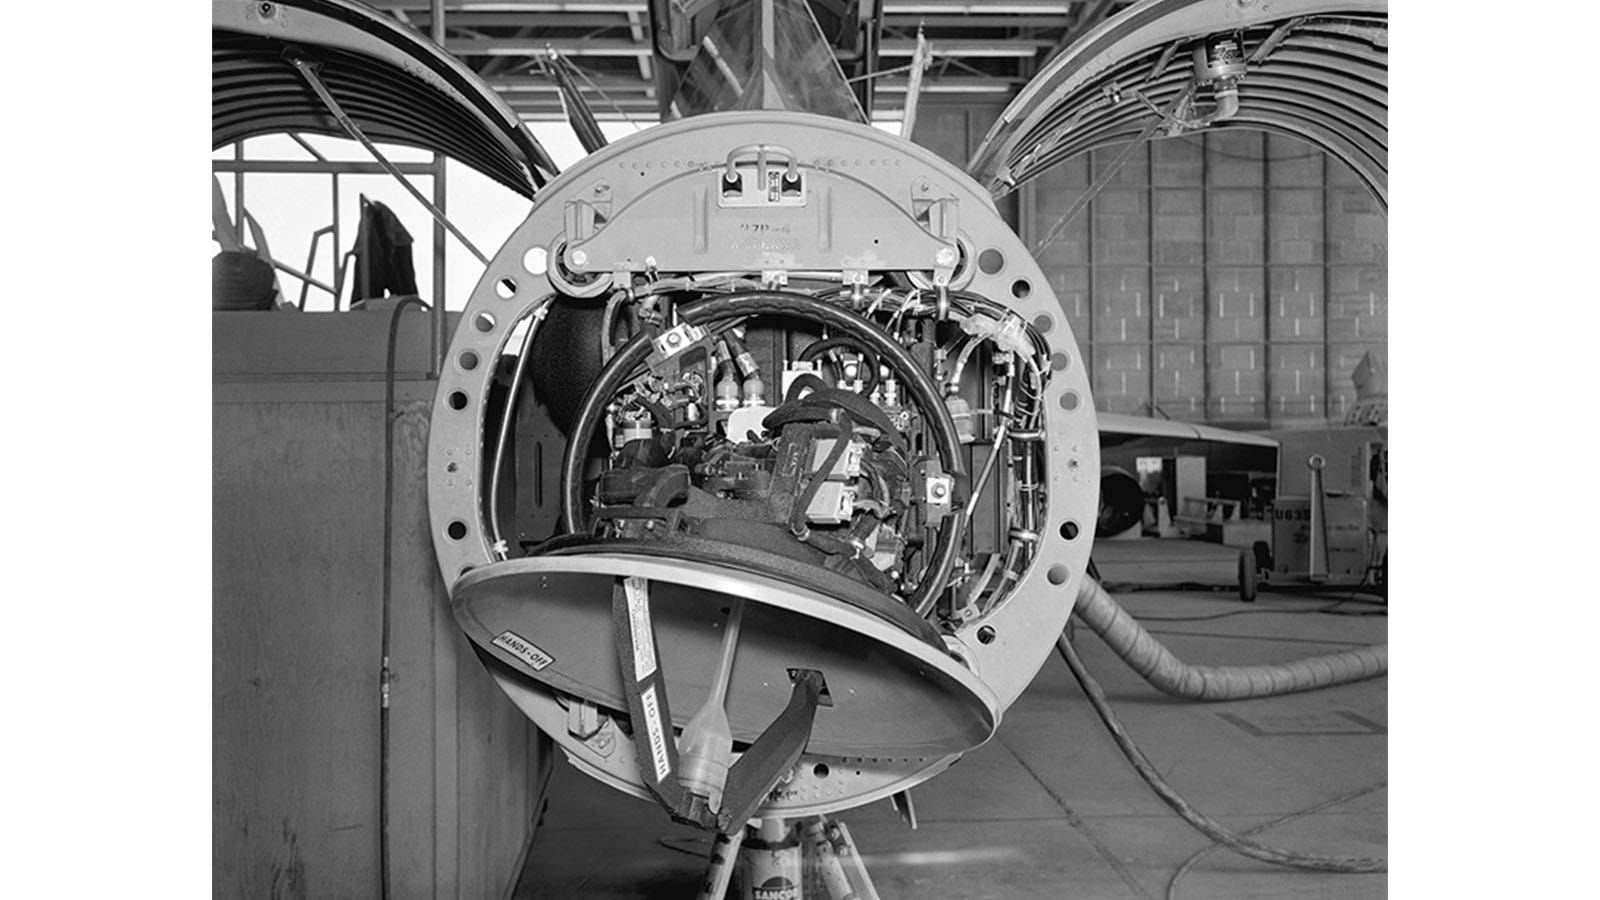 Hughes MA-1 Weapon Control Radar